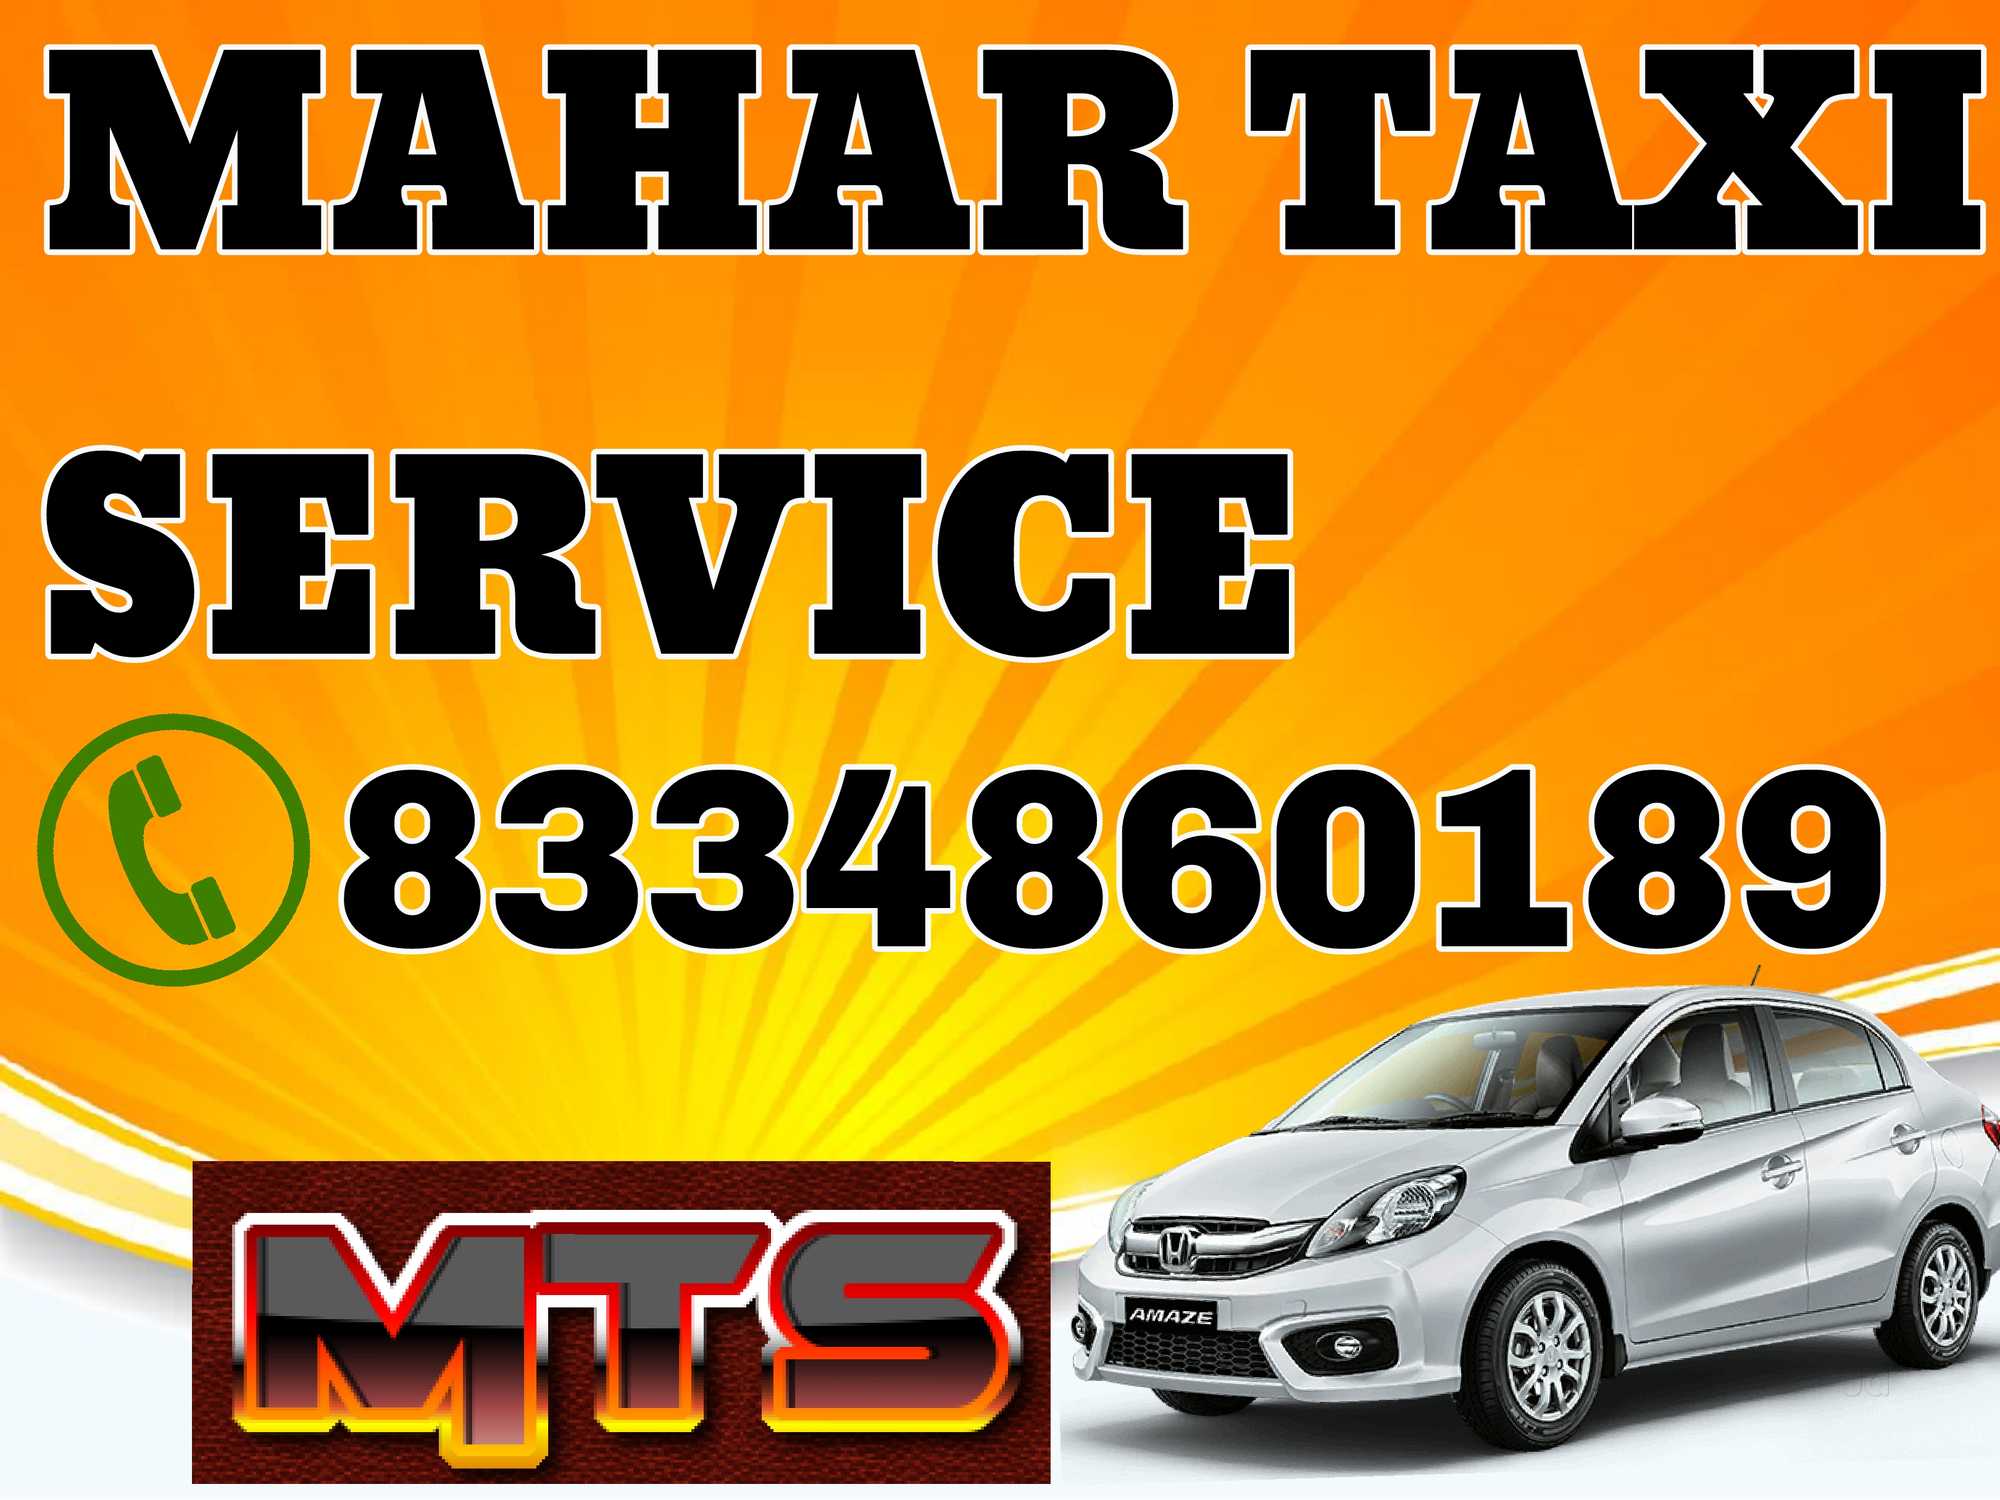 Mahar taxi service  | Taxi service in dehradun